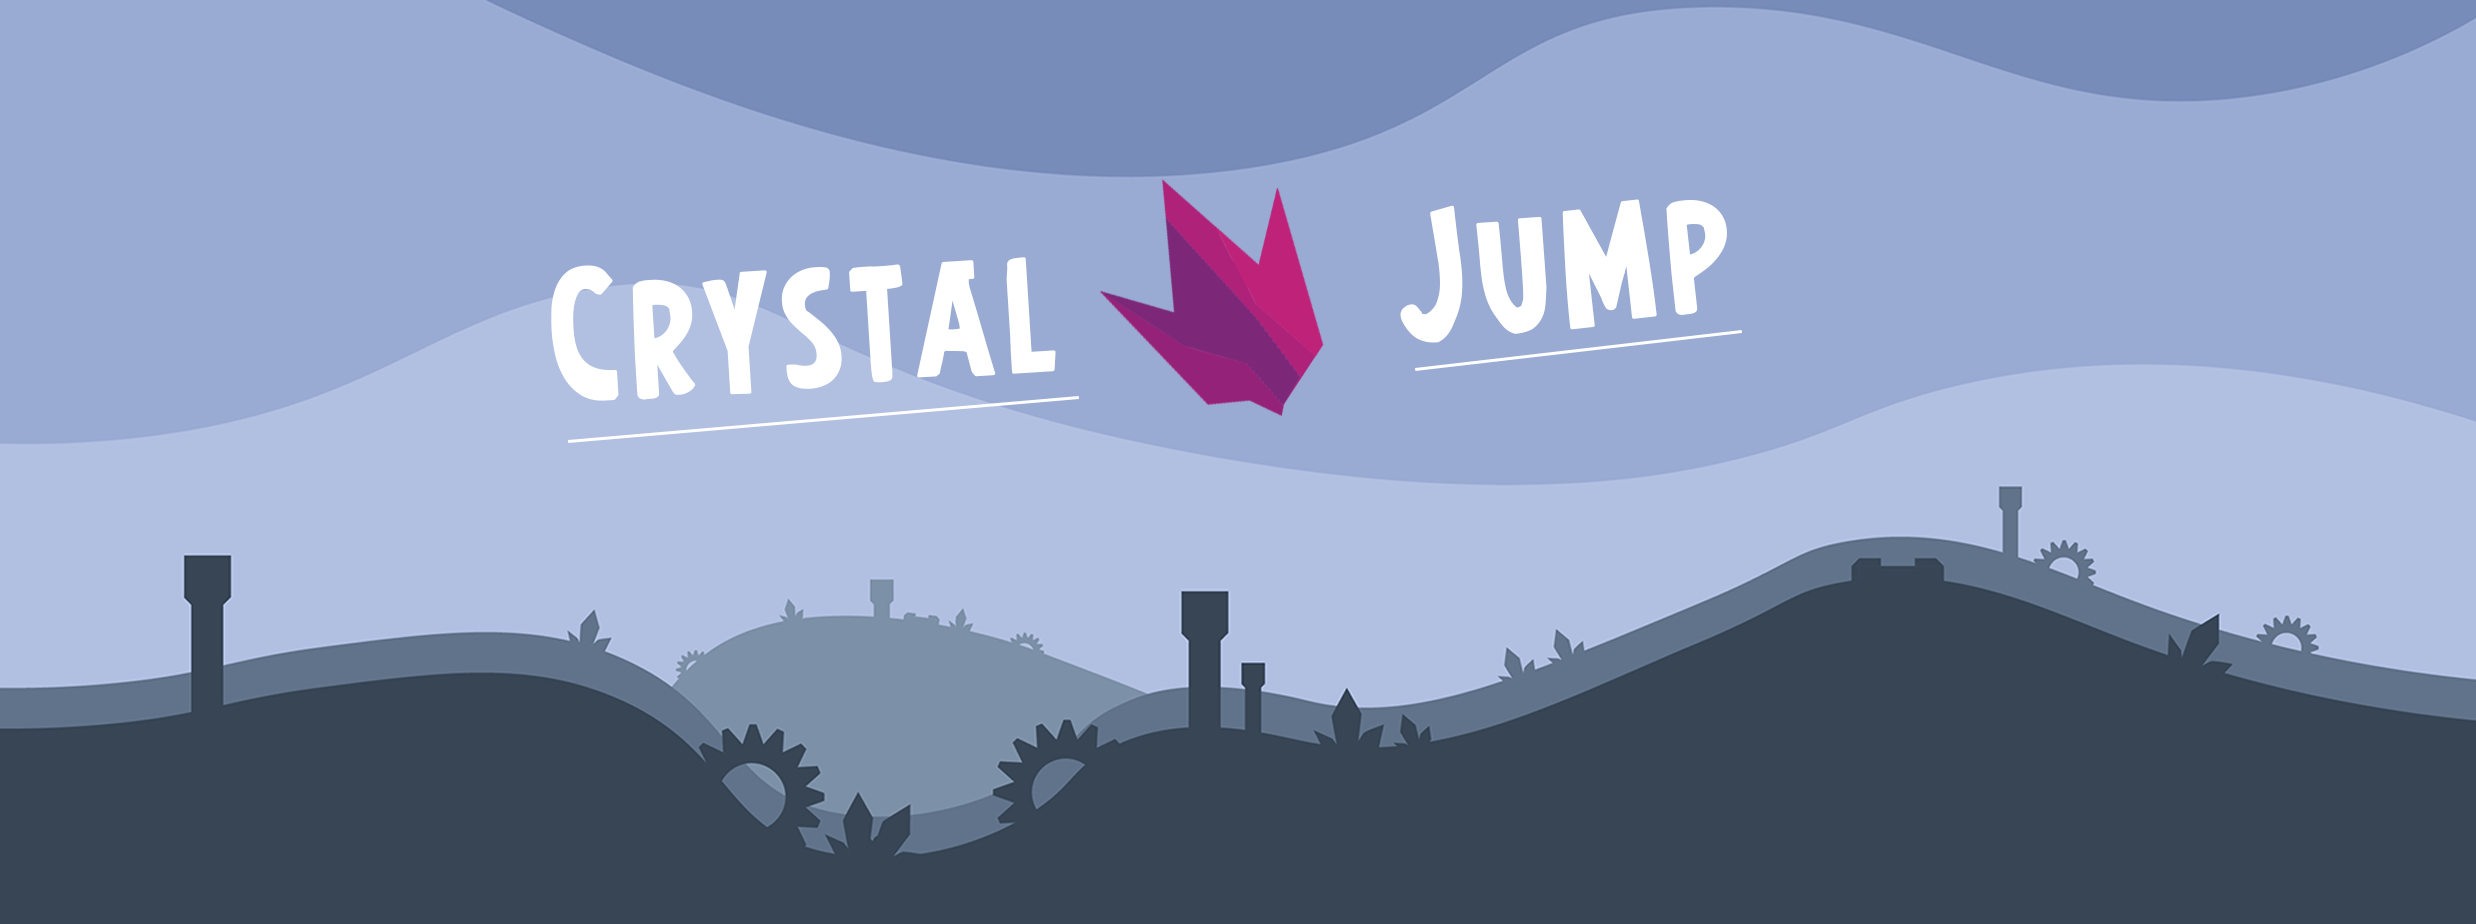 Crystal Jump